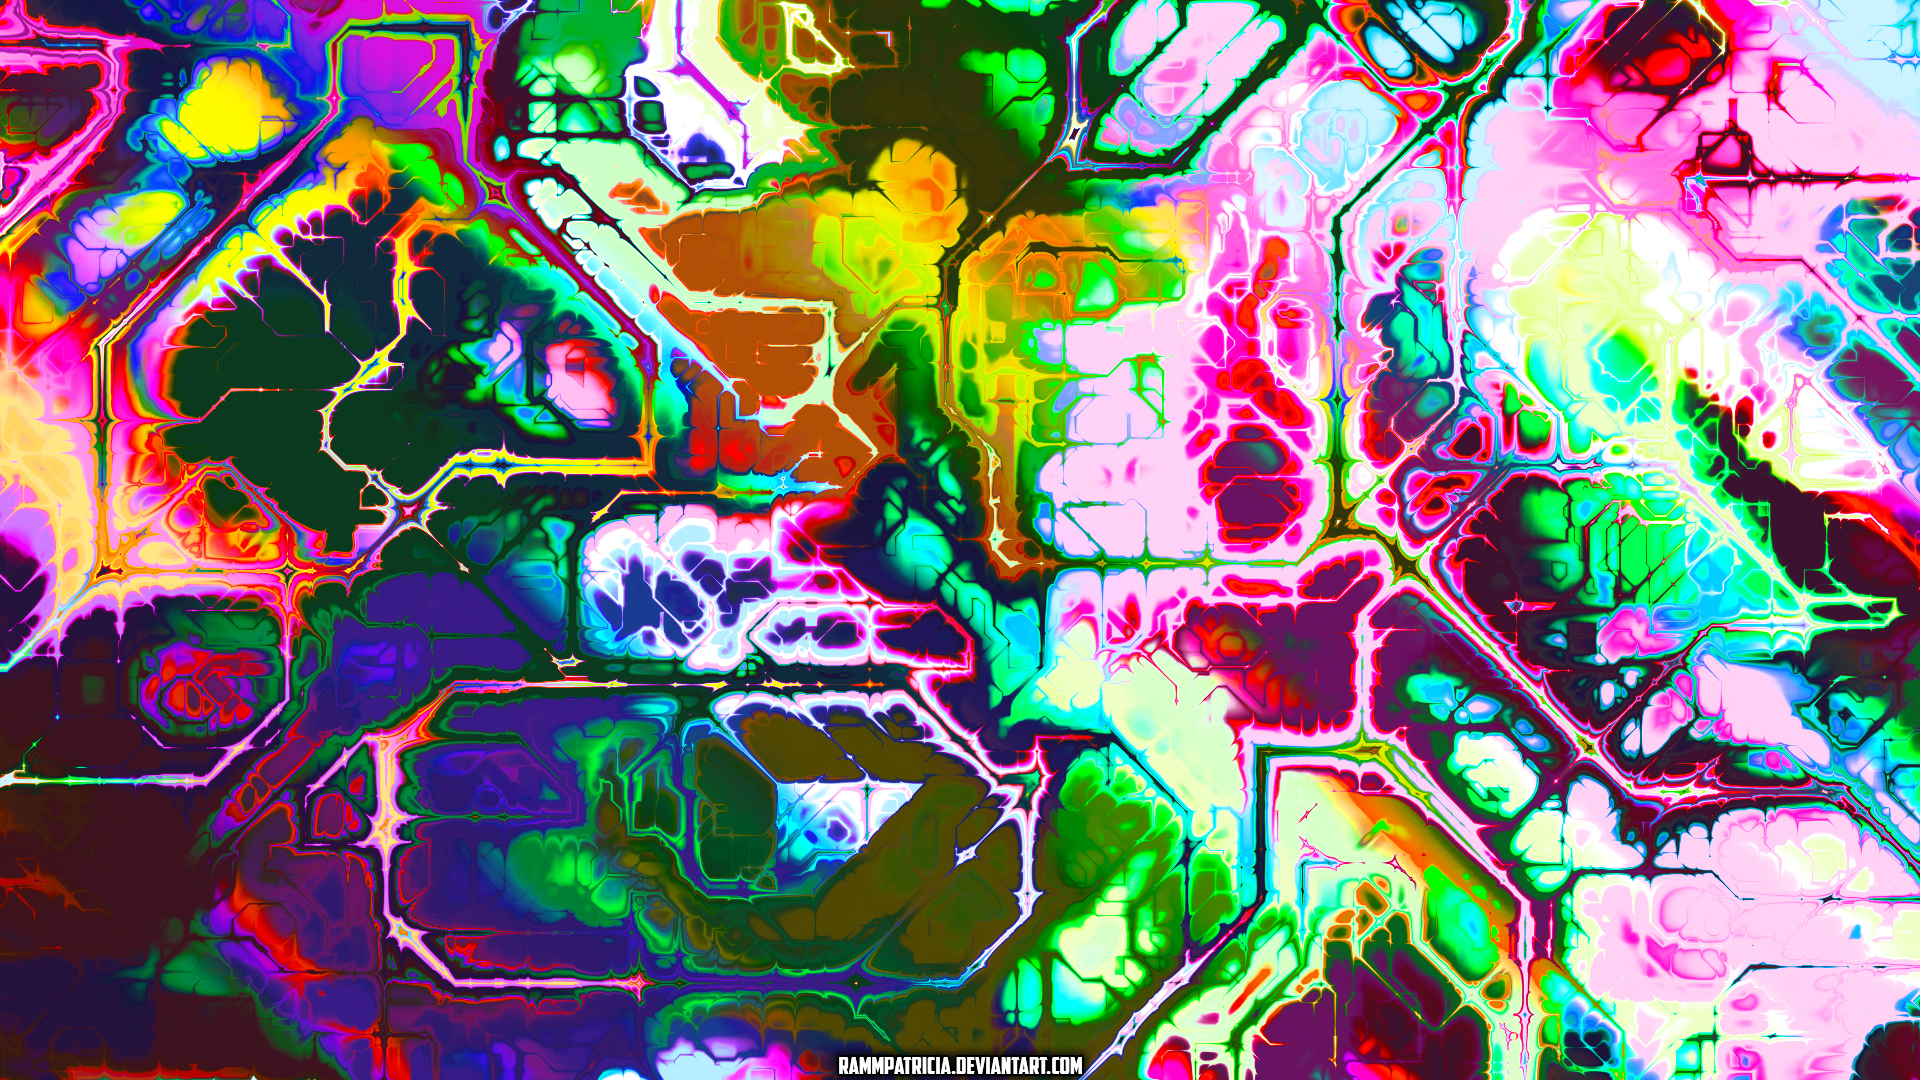 Digital Digital Art RammPatricia Iridescent Colorful Watermarked 1920x1080